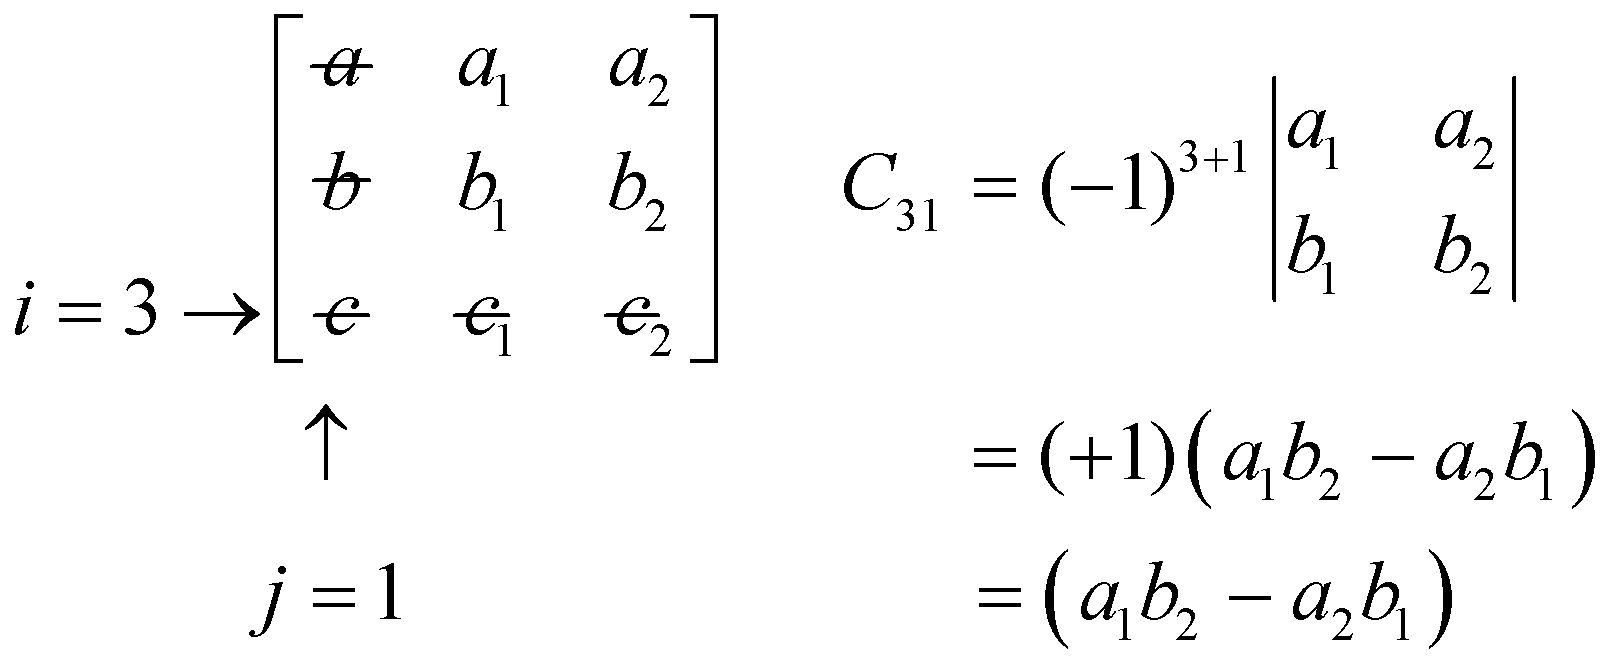 Cofactor C31 = a1b2 - a2b1